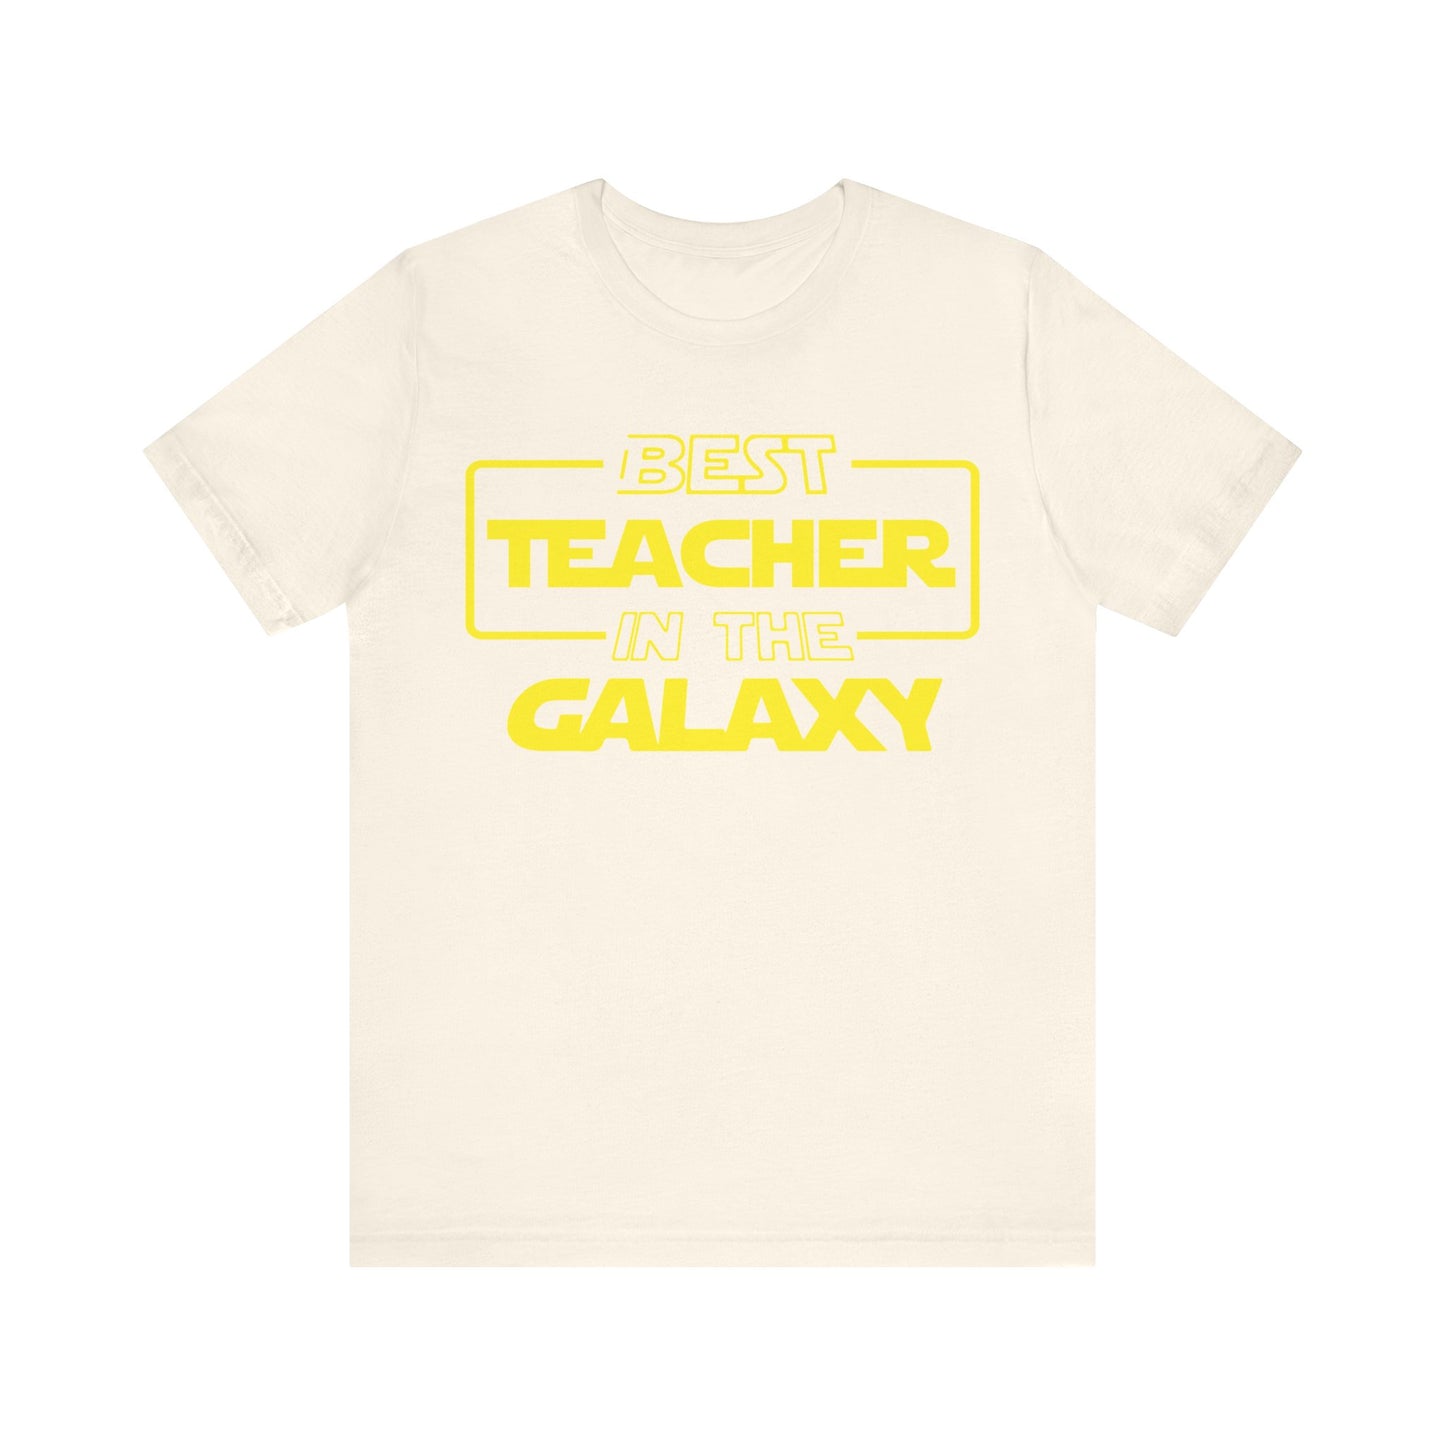 Best Teacher in the Galaxy Tee